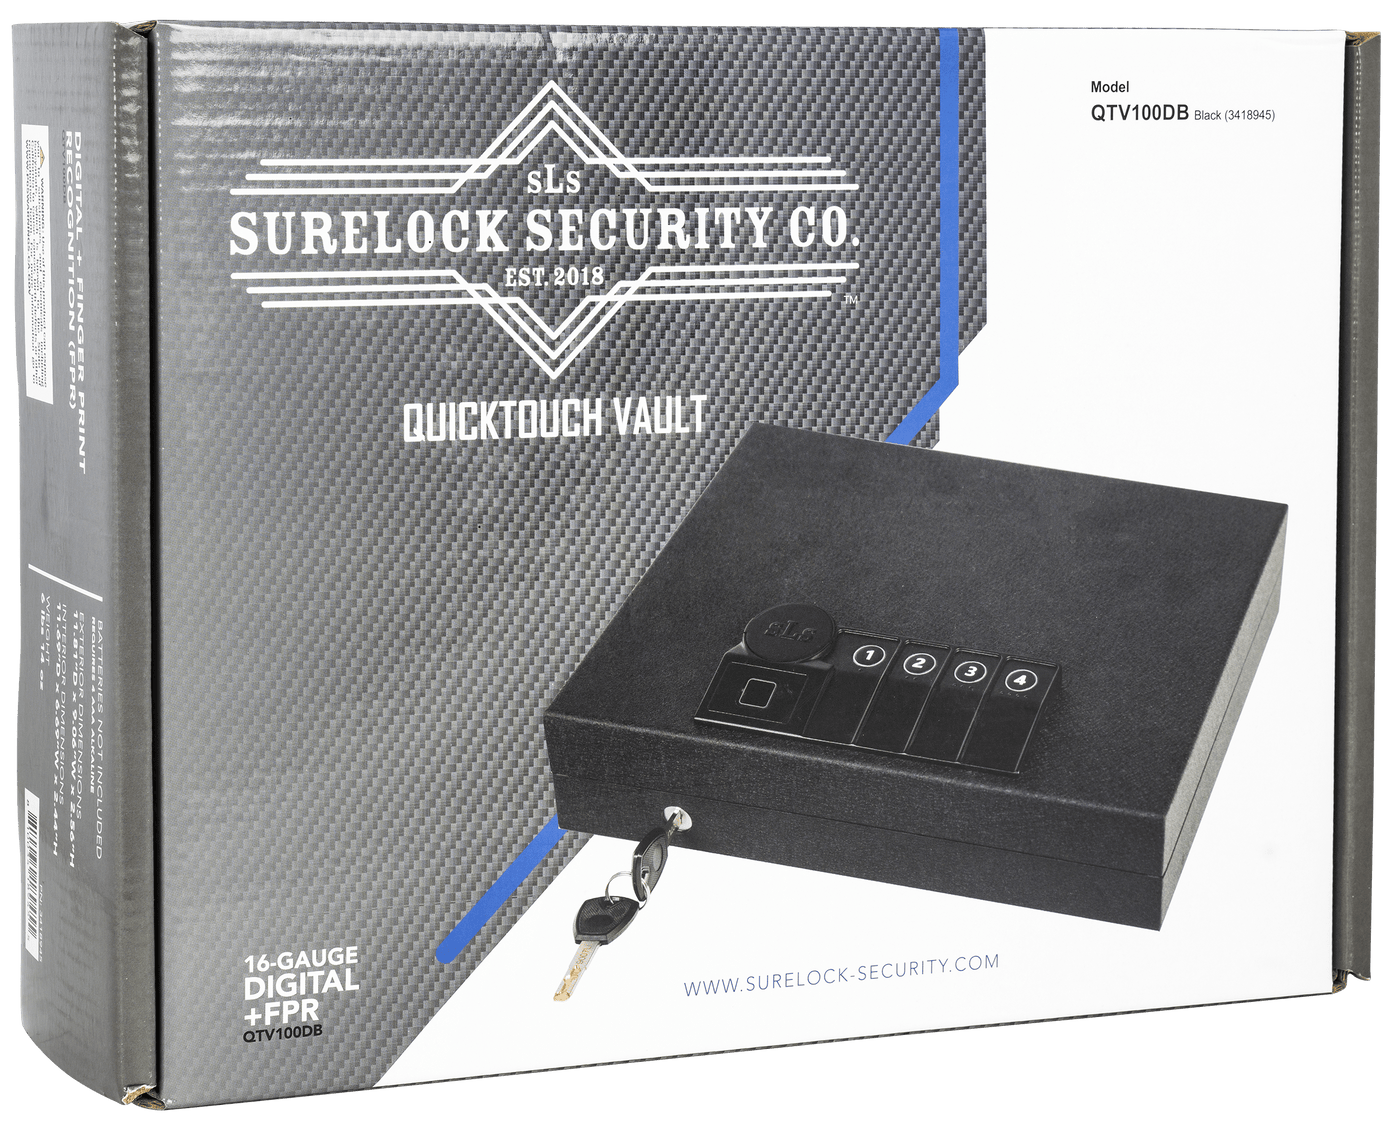 SURELOCK (DANSONS US LLC) Surelock (dansons Us Llc) Quicktouch, Surelock 3418945 Quicktouch Vault-model 100 Dig/bi Firearm Accessories